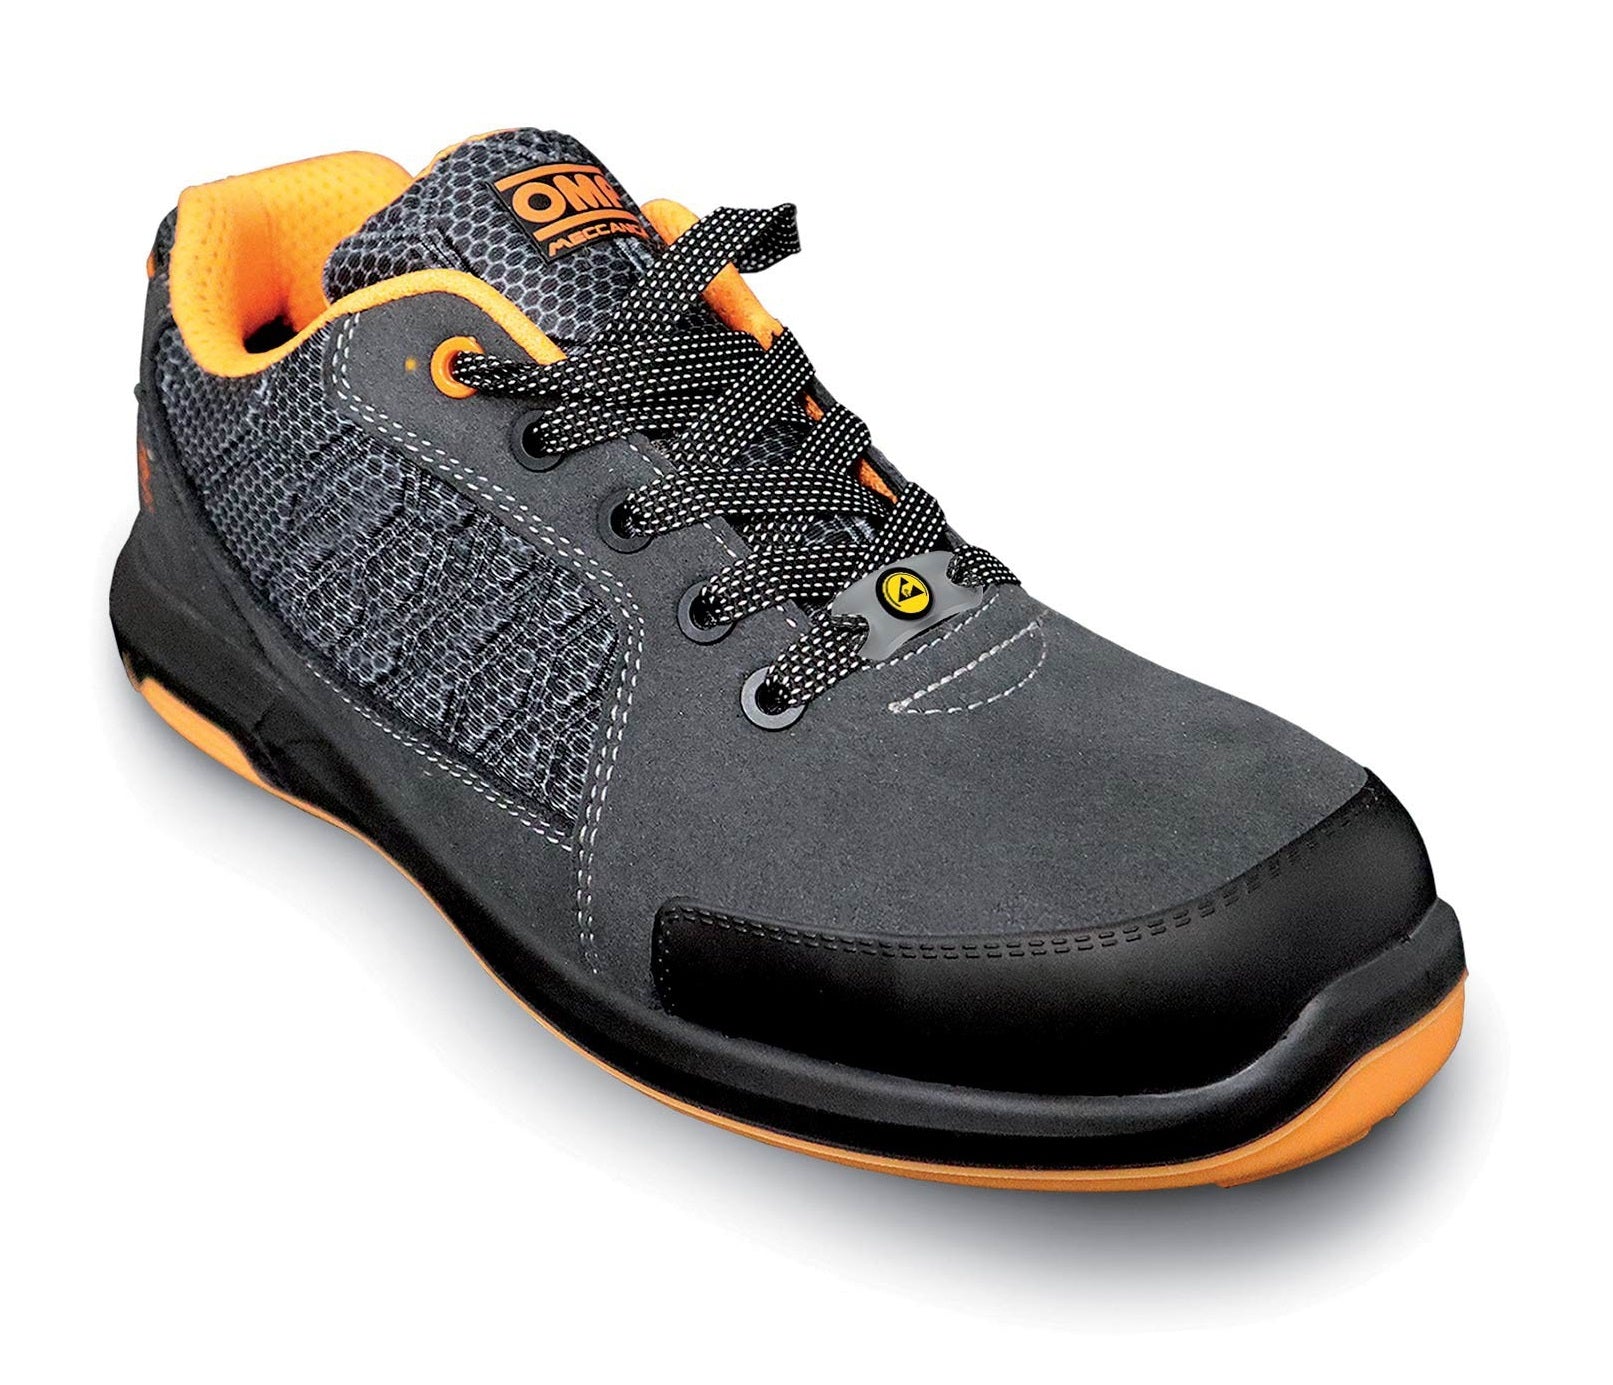 OMP OMPS90014320 Pro Sport Safety Mechanic's shoes, black/orange, size 43 Photo-0 